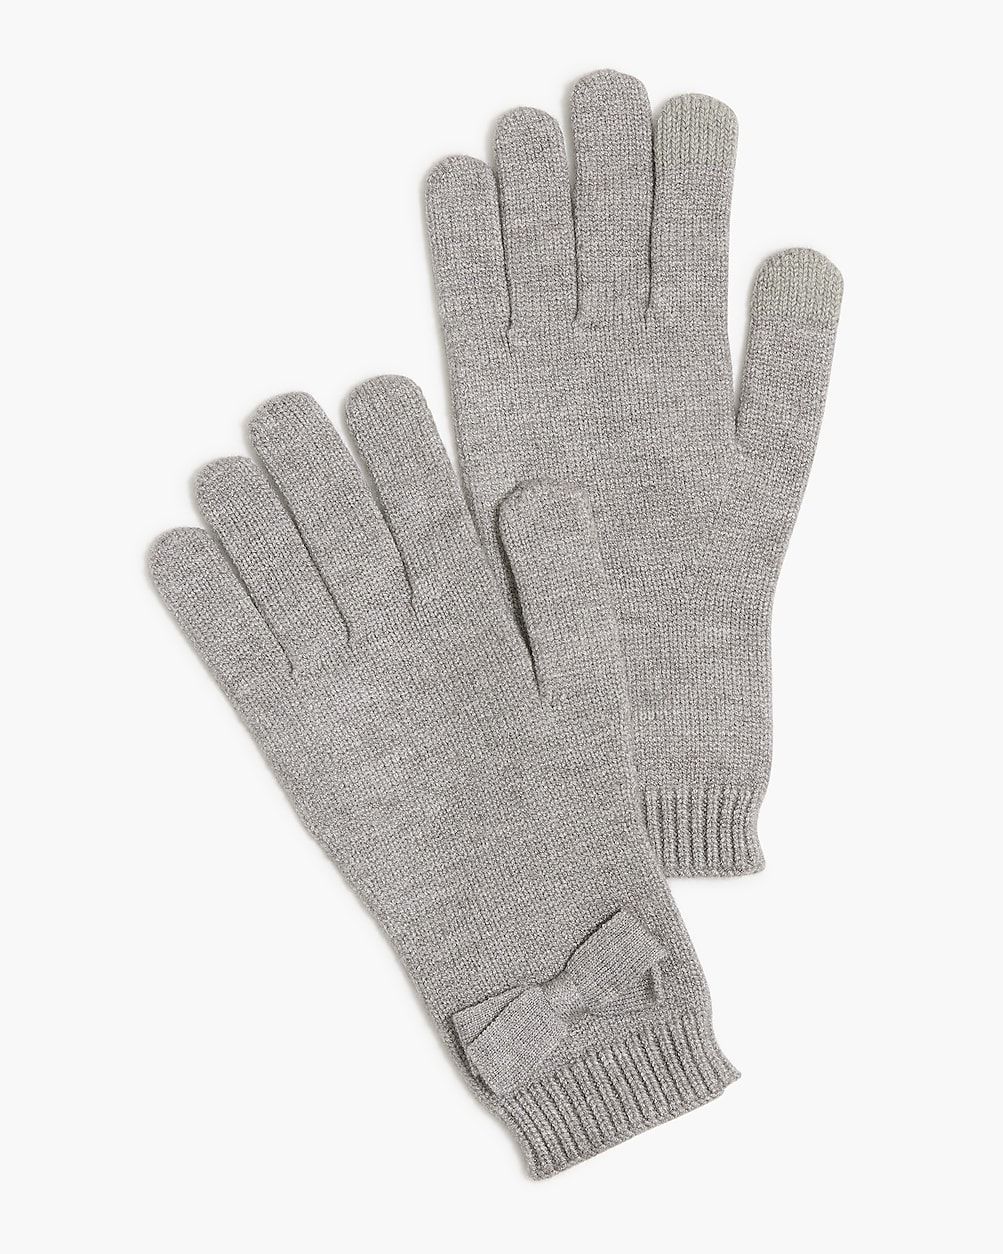 Bow tech gloves | J.Crew Factory